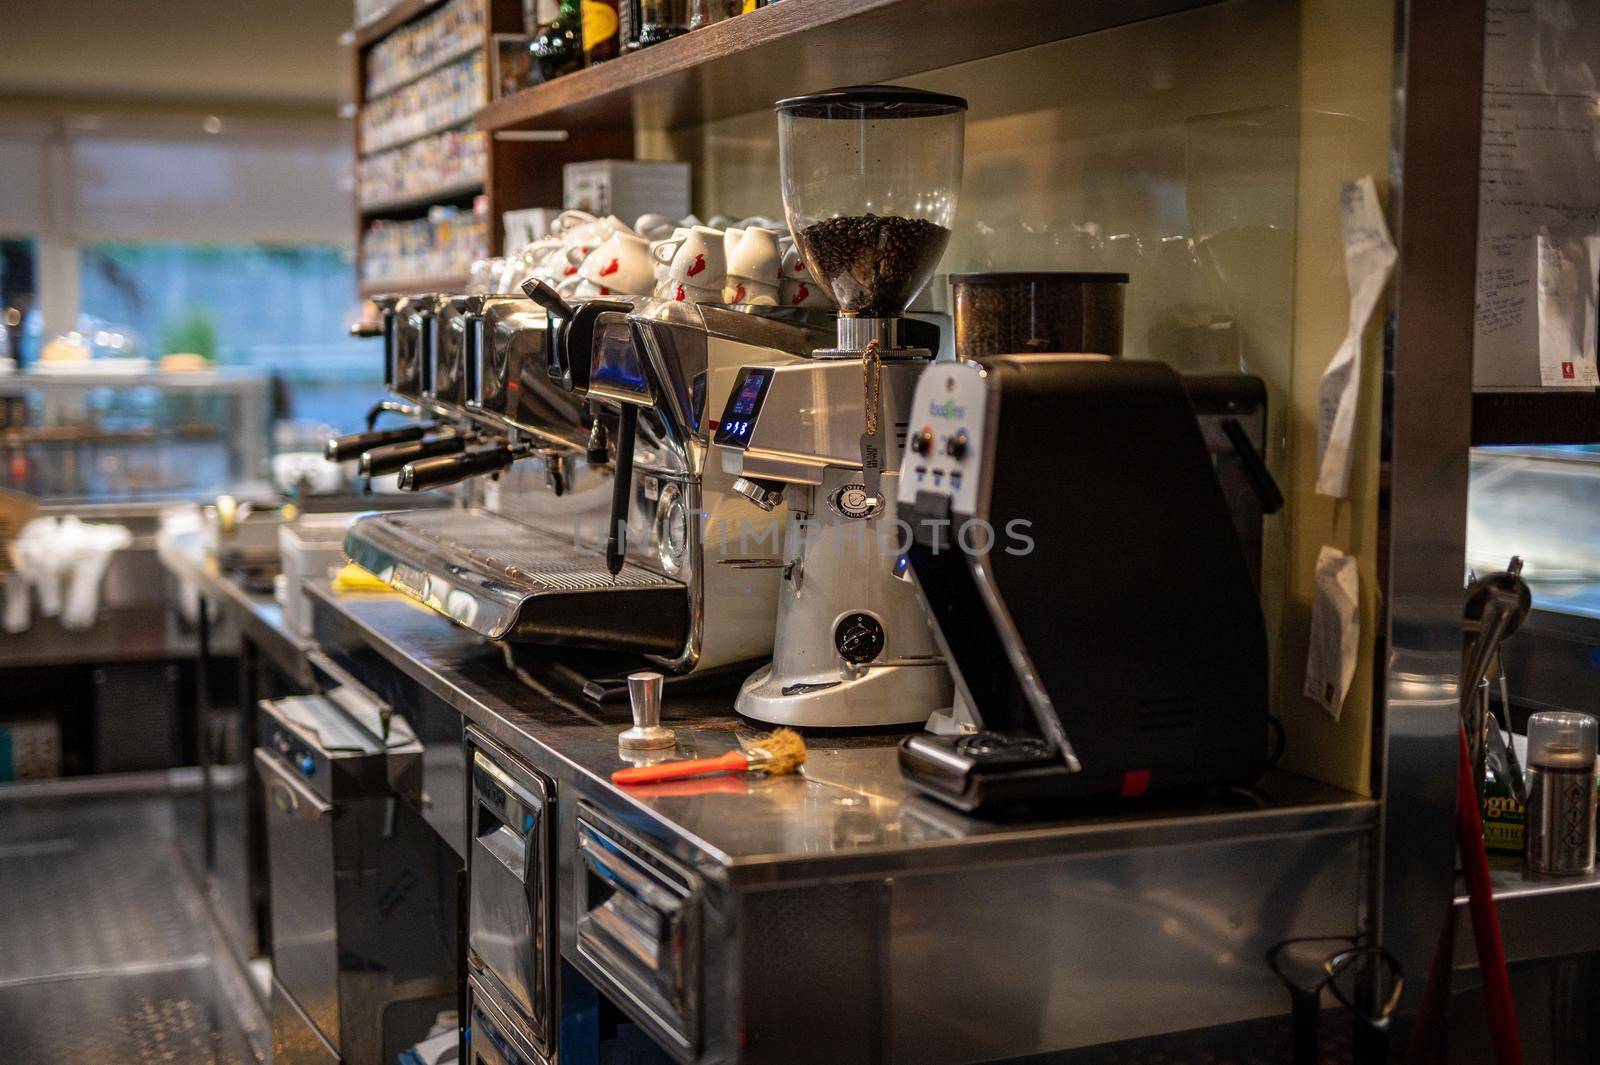 terni,italy october 08 2021:coffee counter with espresso machine